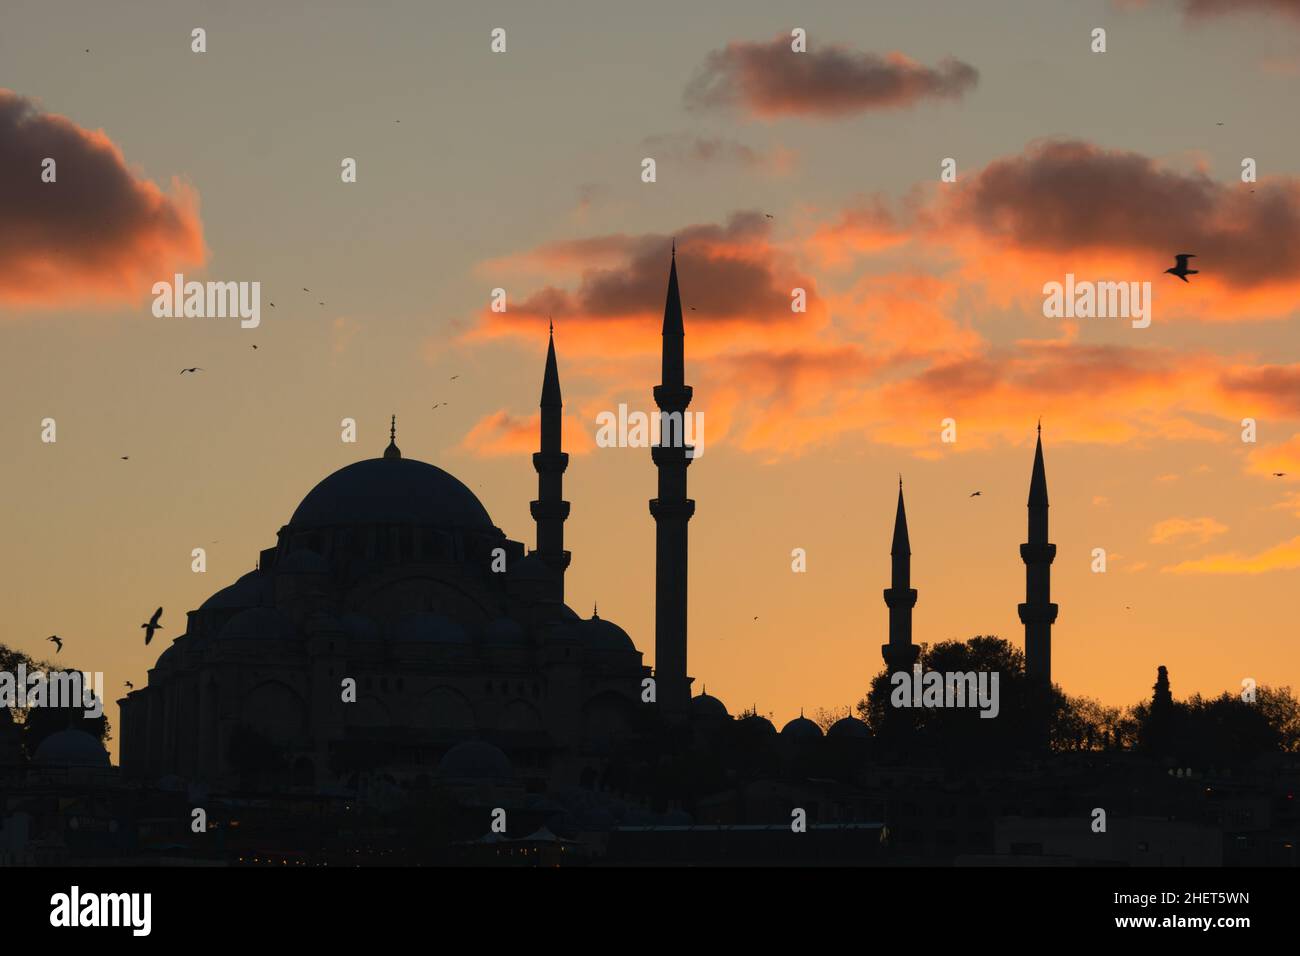 Moschee di Istanbul. Silhouette della moschea di Suleymaniye al tramonto. Ramadan o iftar o kandil o laylat al-qadr o foto di sfondo islamico. Effetto rumore i Foto Stock